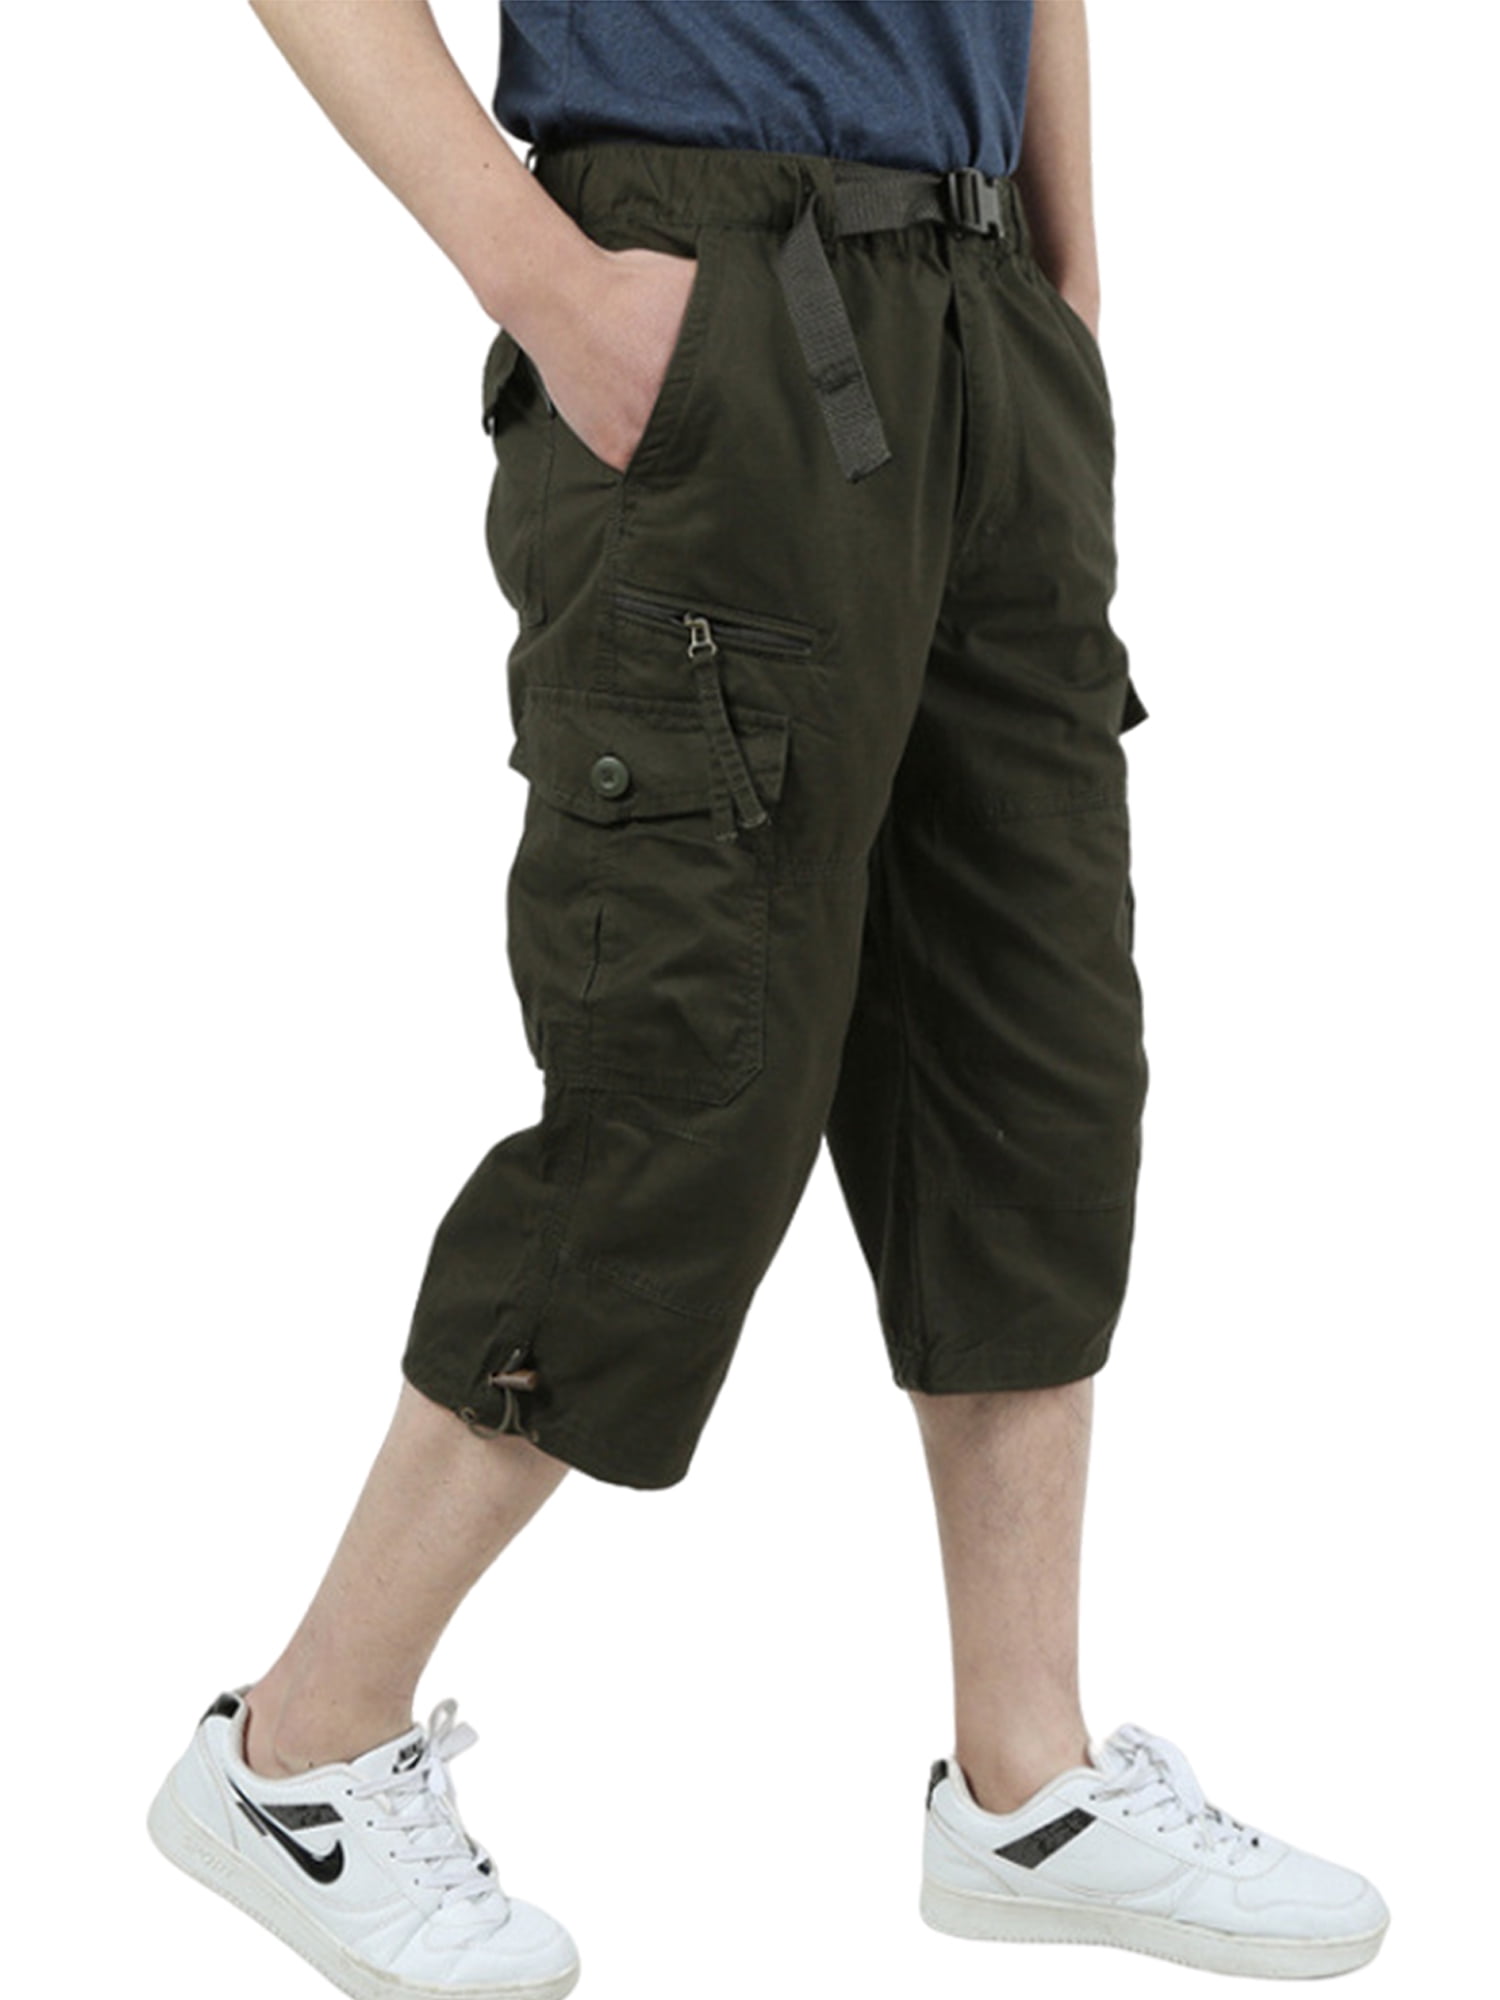 CRYSULLY Men's Casual Cotton 3/4 Pants Elastic Waistband Shorts Loose Fit  Knee-Length Cargo Shorts, Khaki, 40 price in Saudi Arabia | Amazon Saudi  Arabia | kanbkam